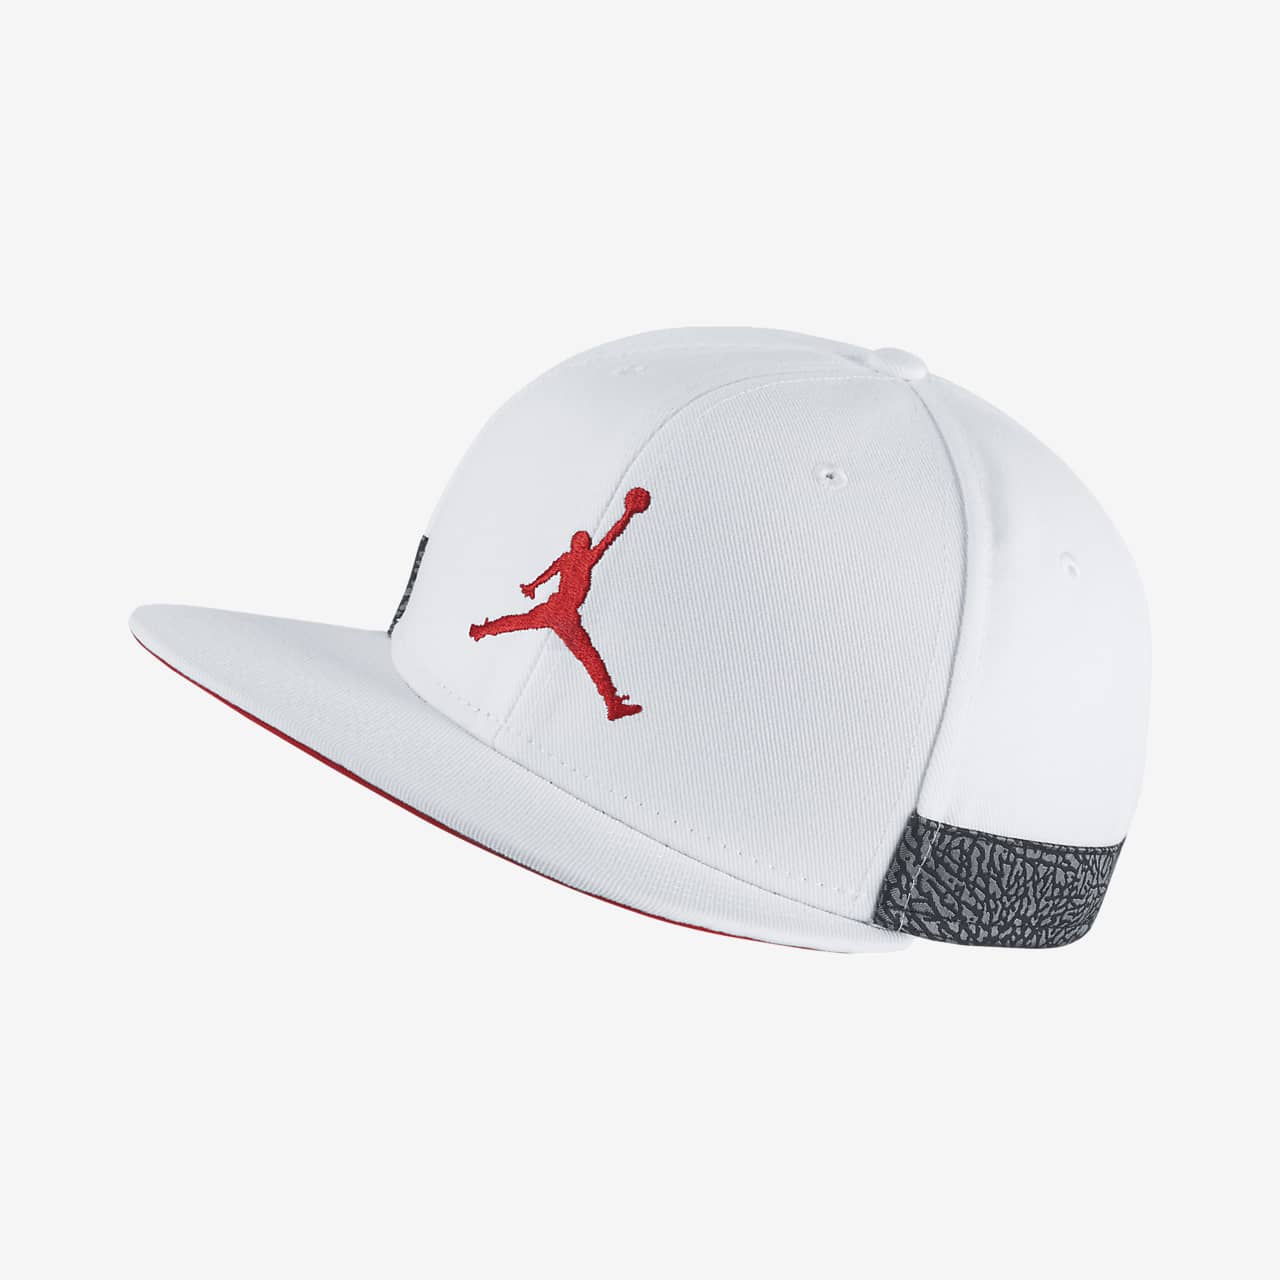 Jordan Jumpman Pro AJ3 Adjustable Hat 